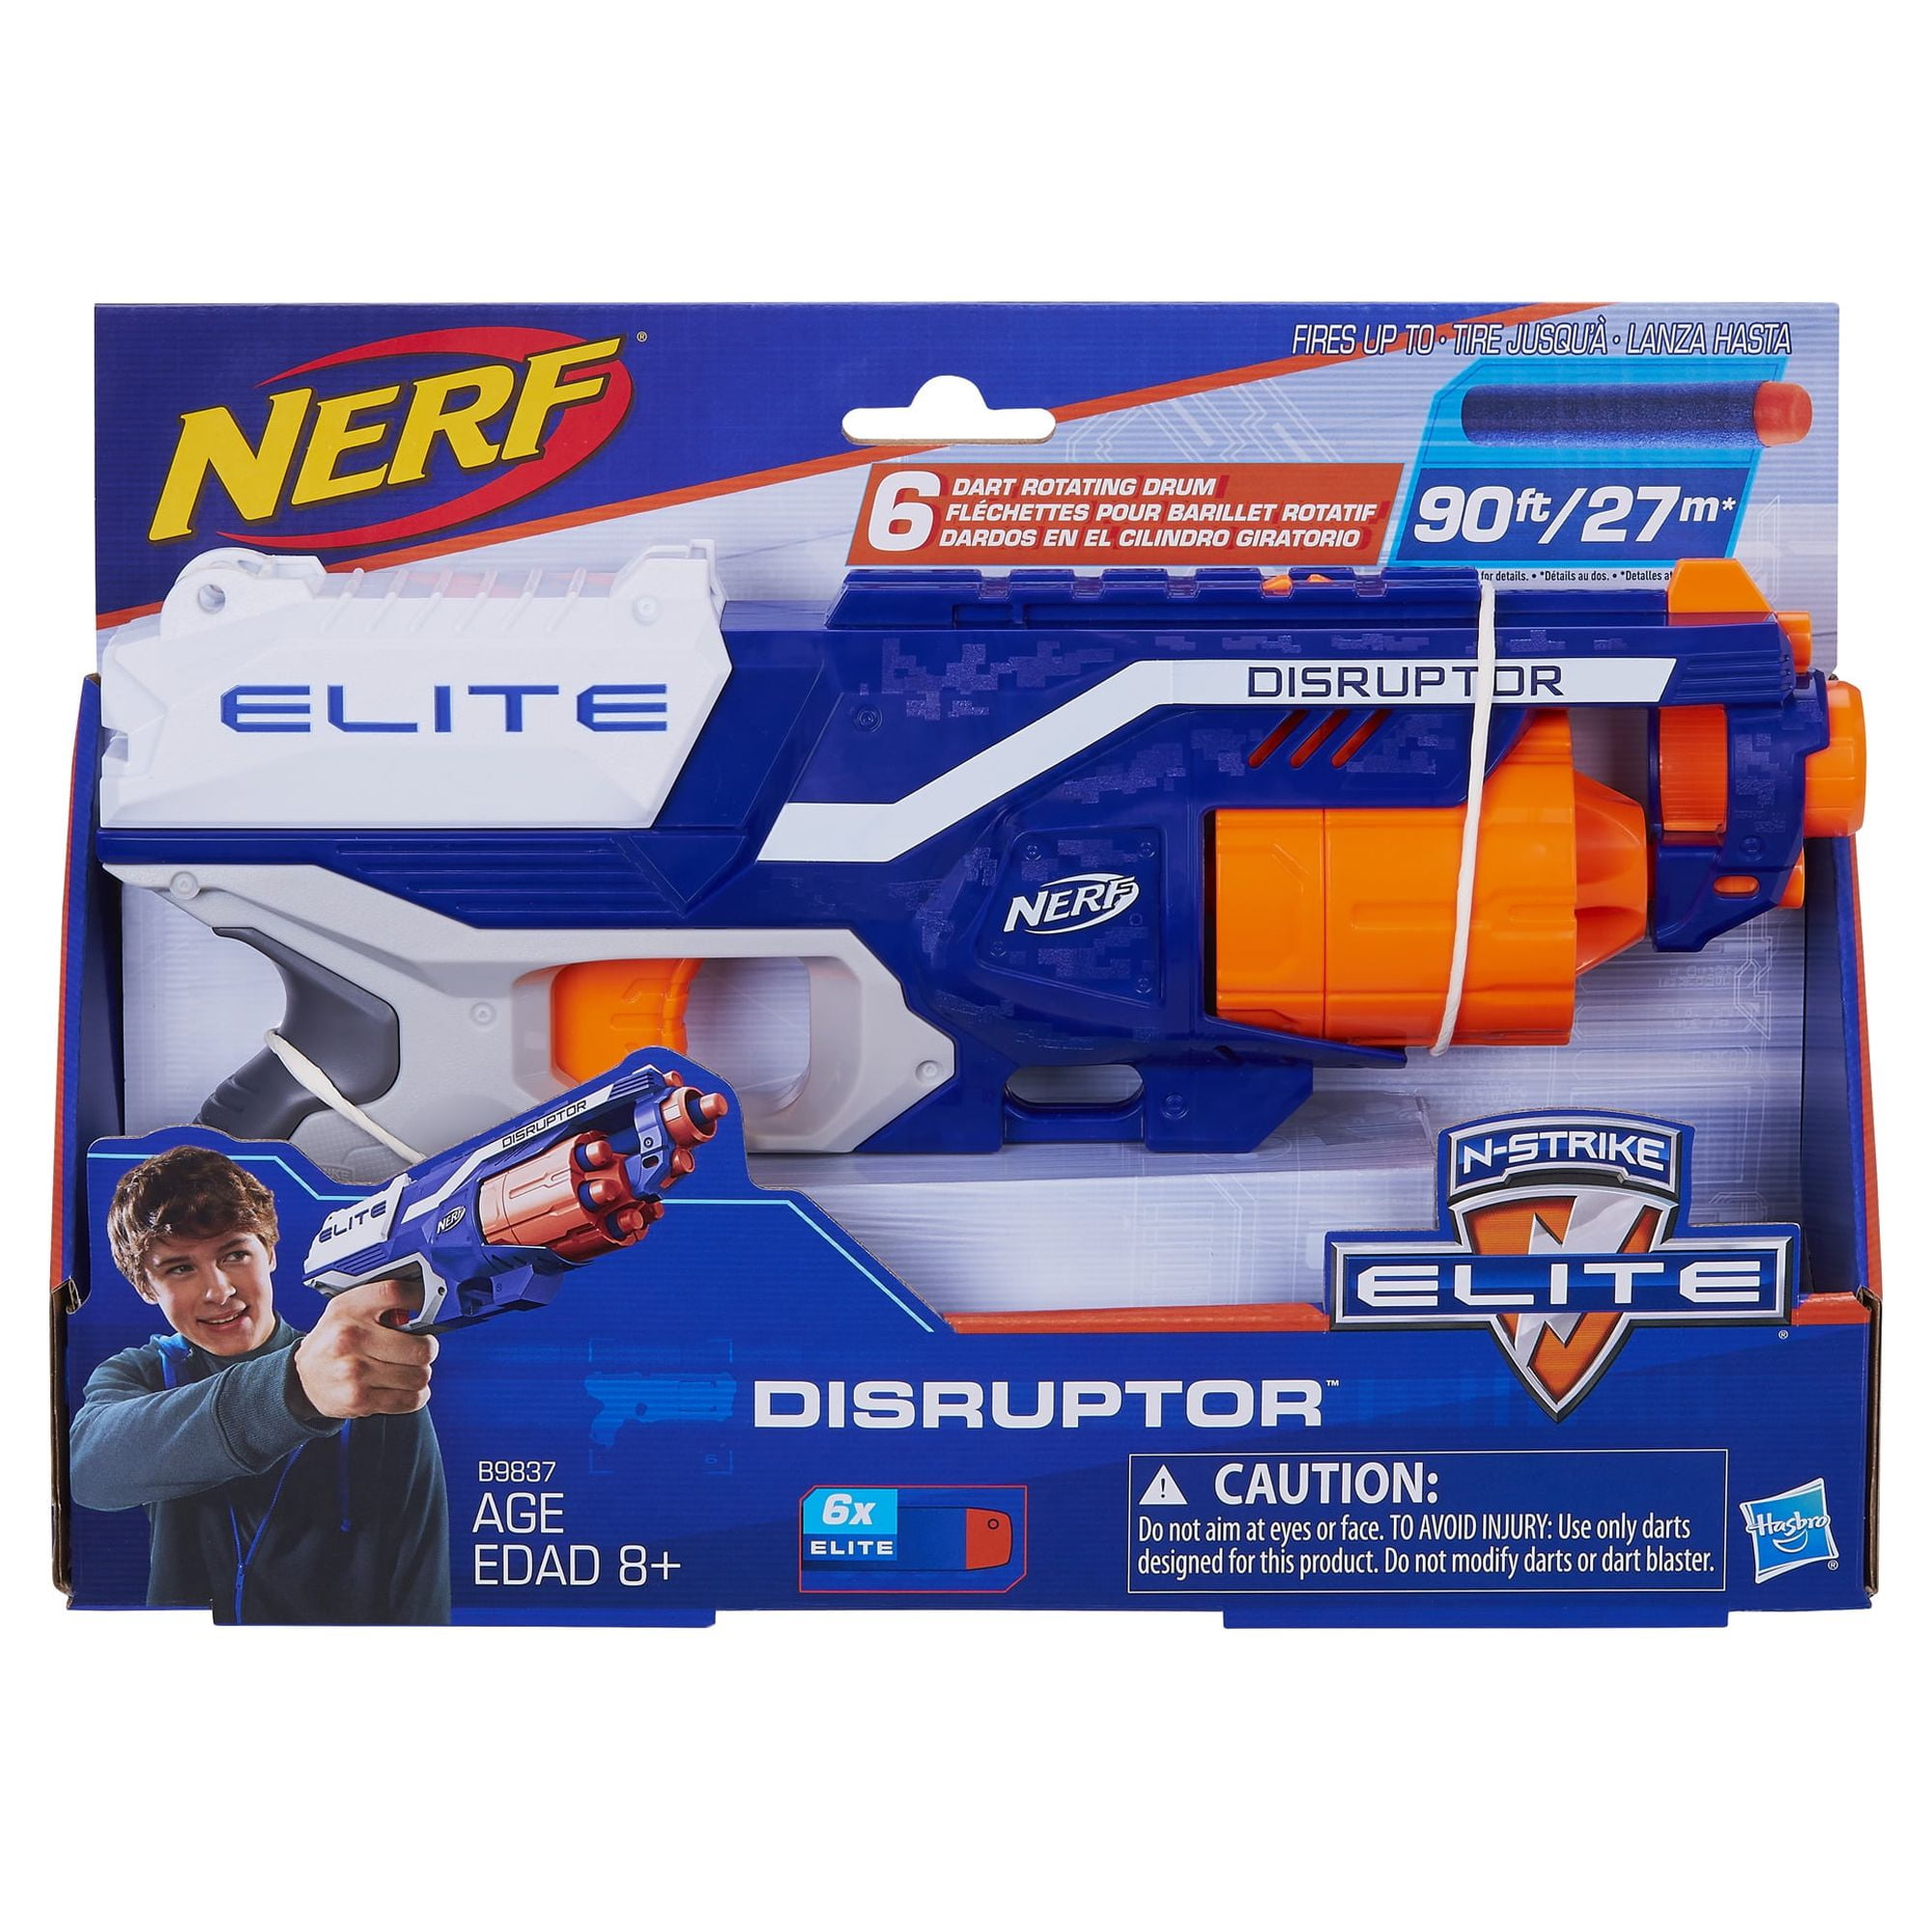 NERF Disruptor Elite Blaster - 6-Dart Rotating Drum, Slam Fire, Includes 6  Official Nerf Elite Darts - for Kids, Teens, Adults